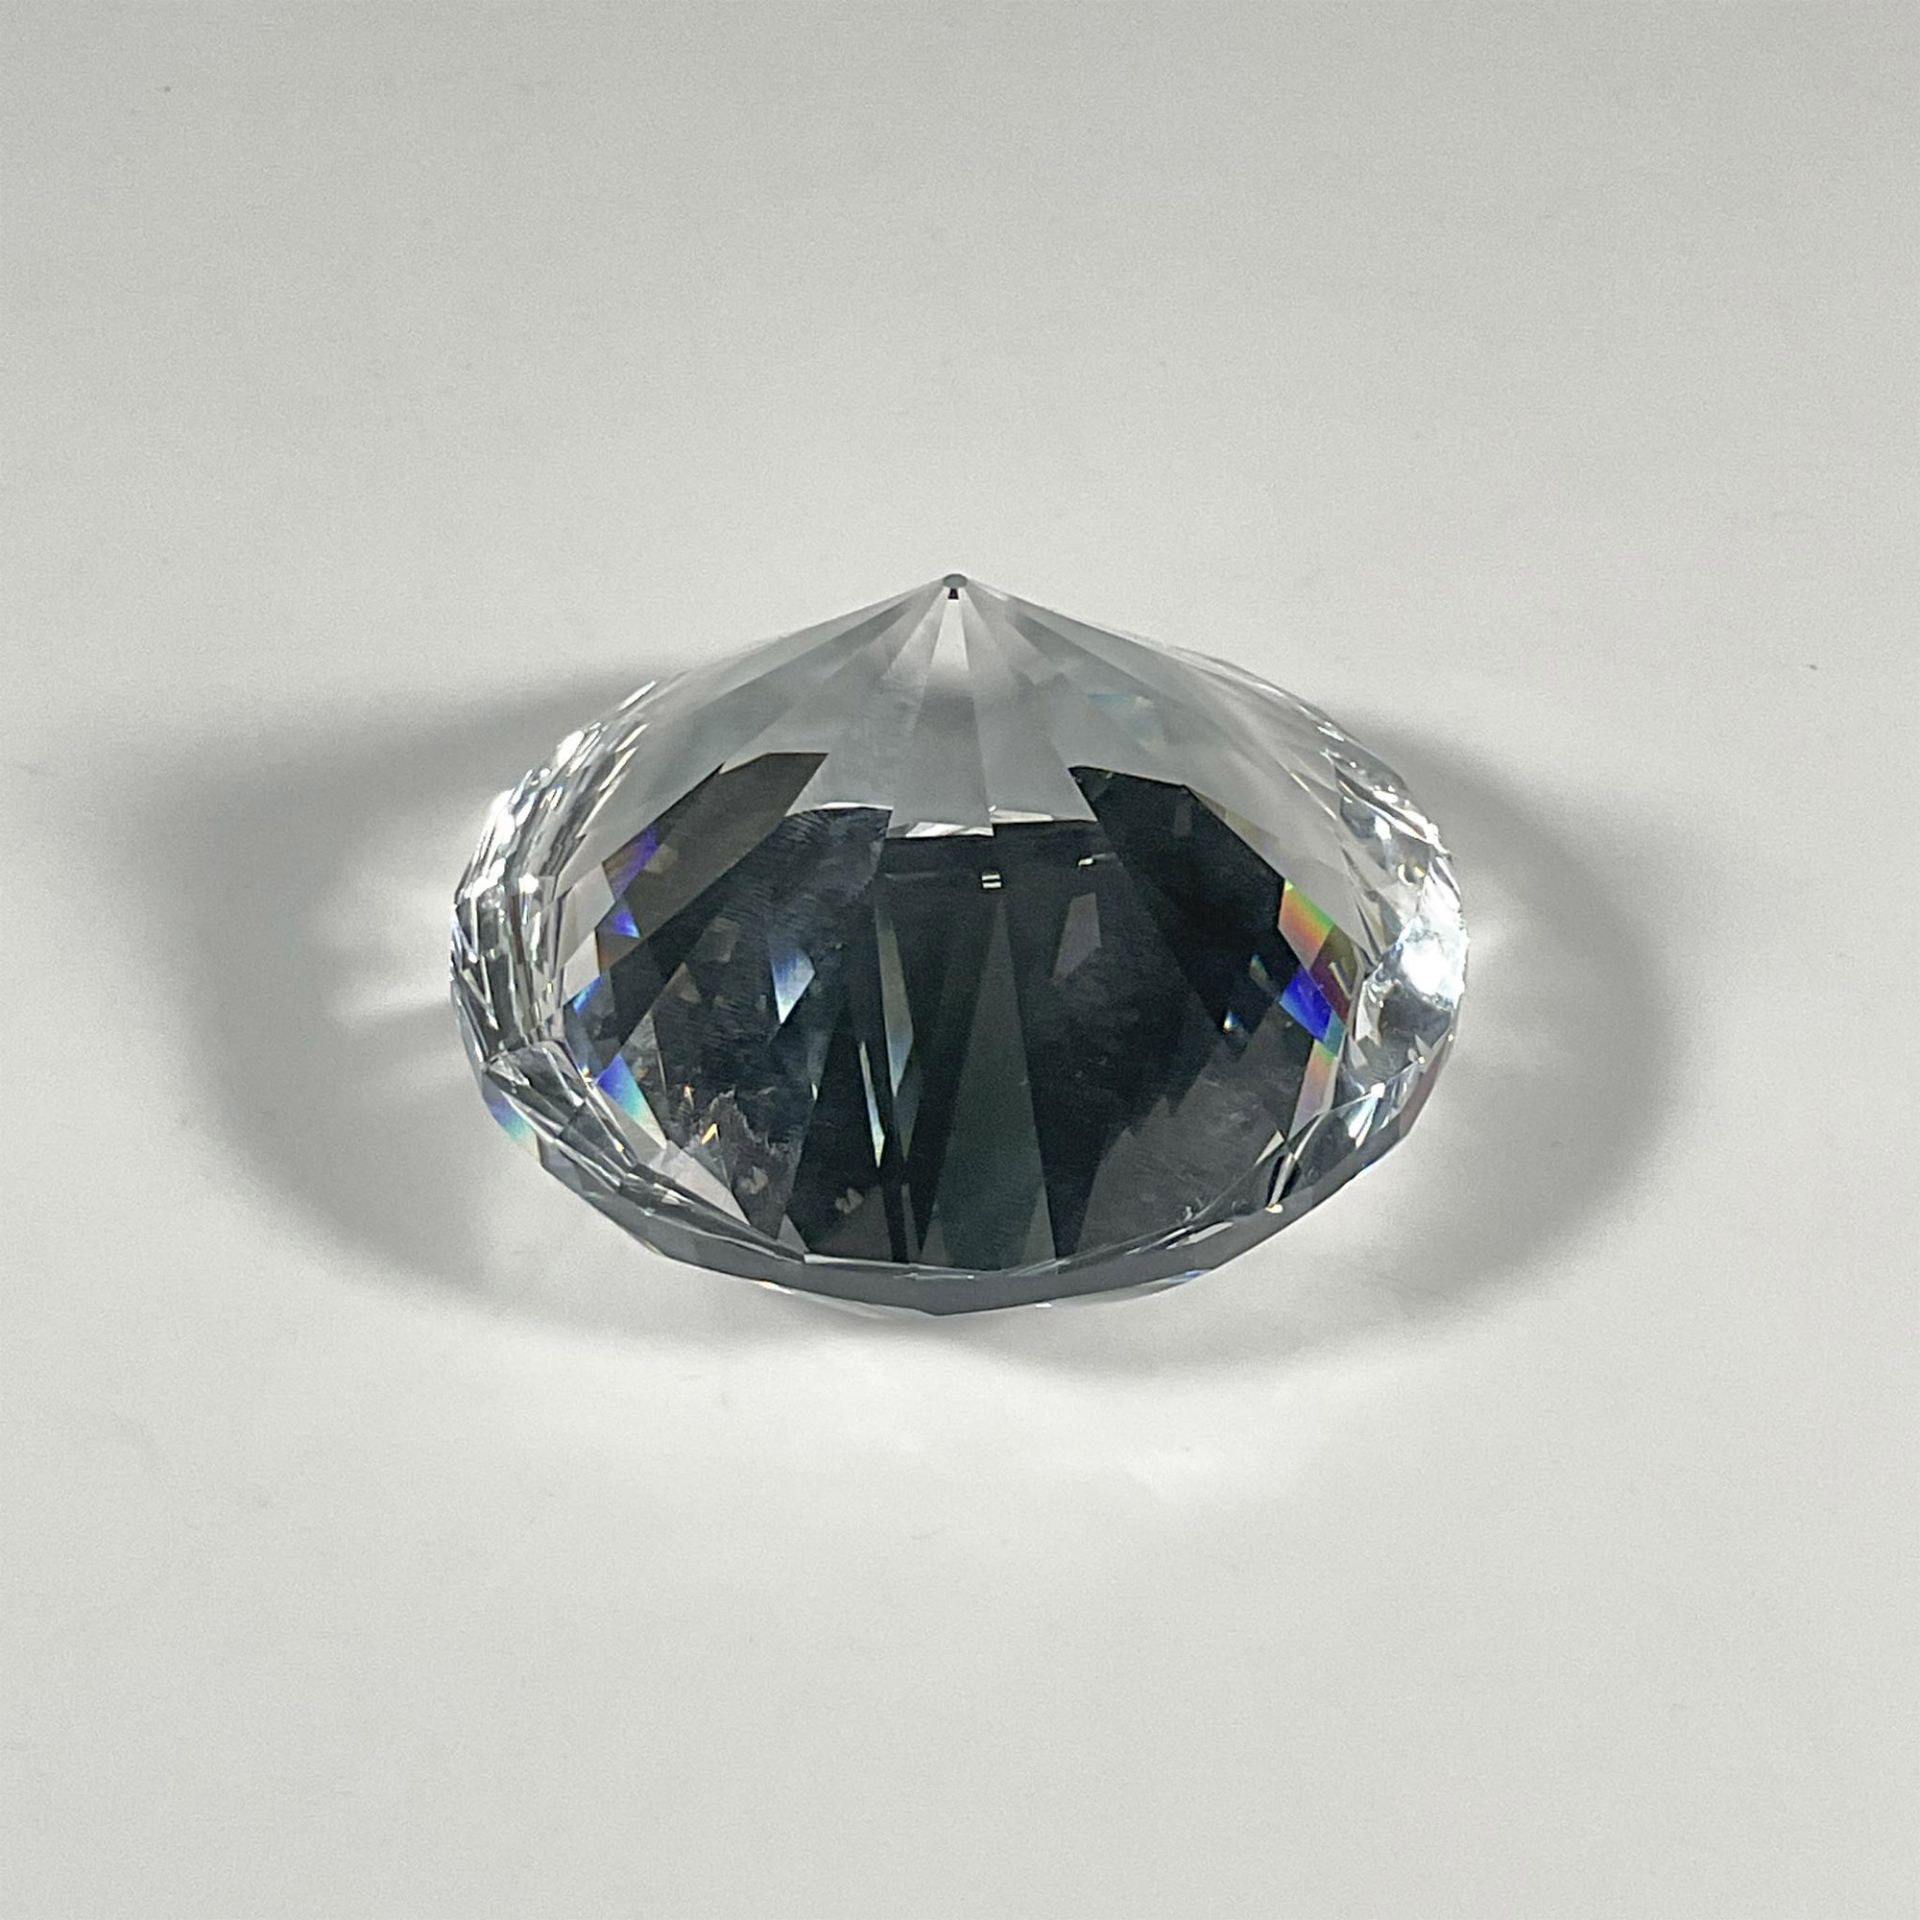 Swarovski Crystal Paperweight, Small Chaton - Image 2 of 6